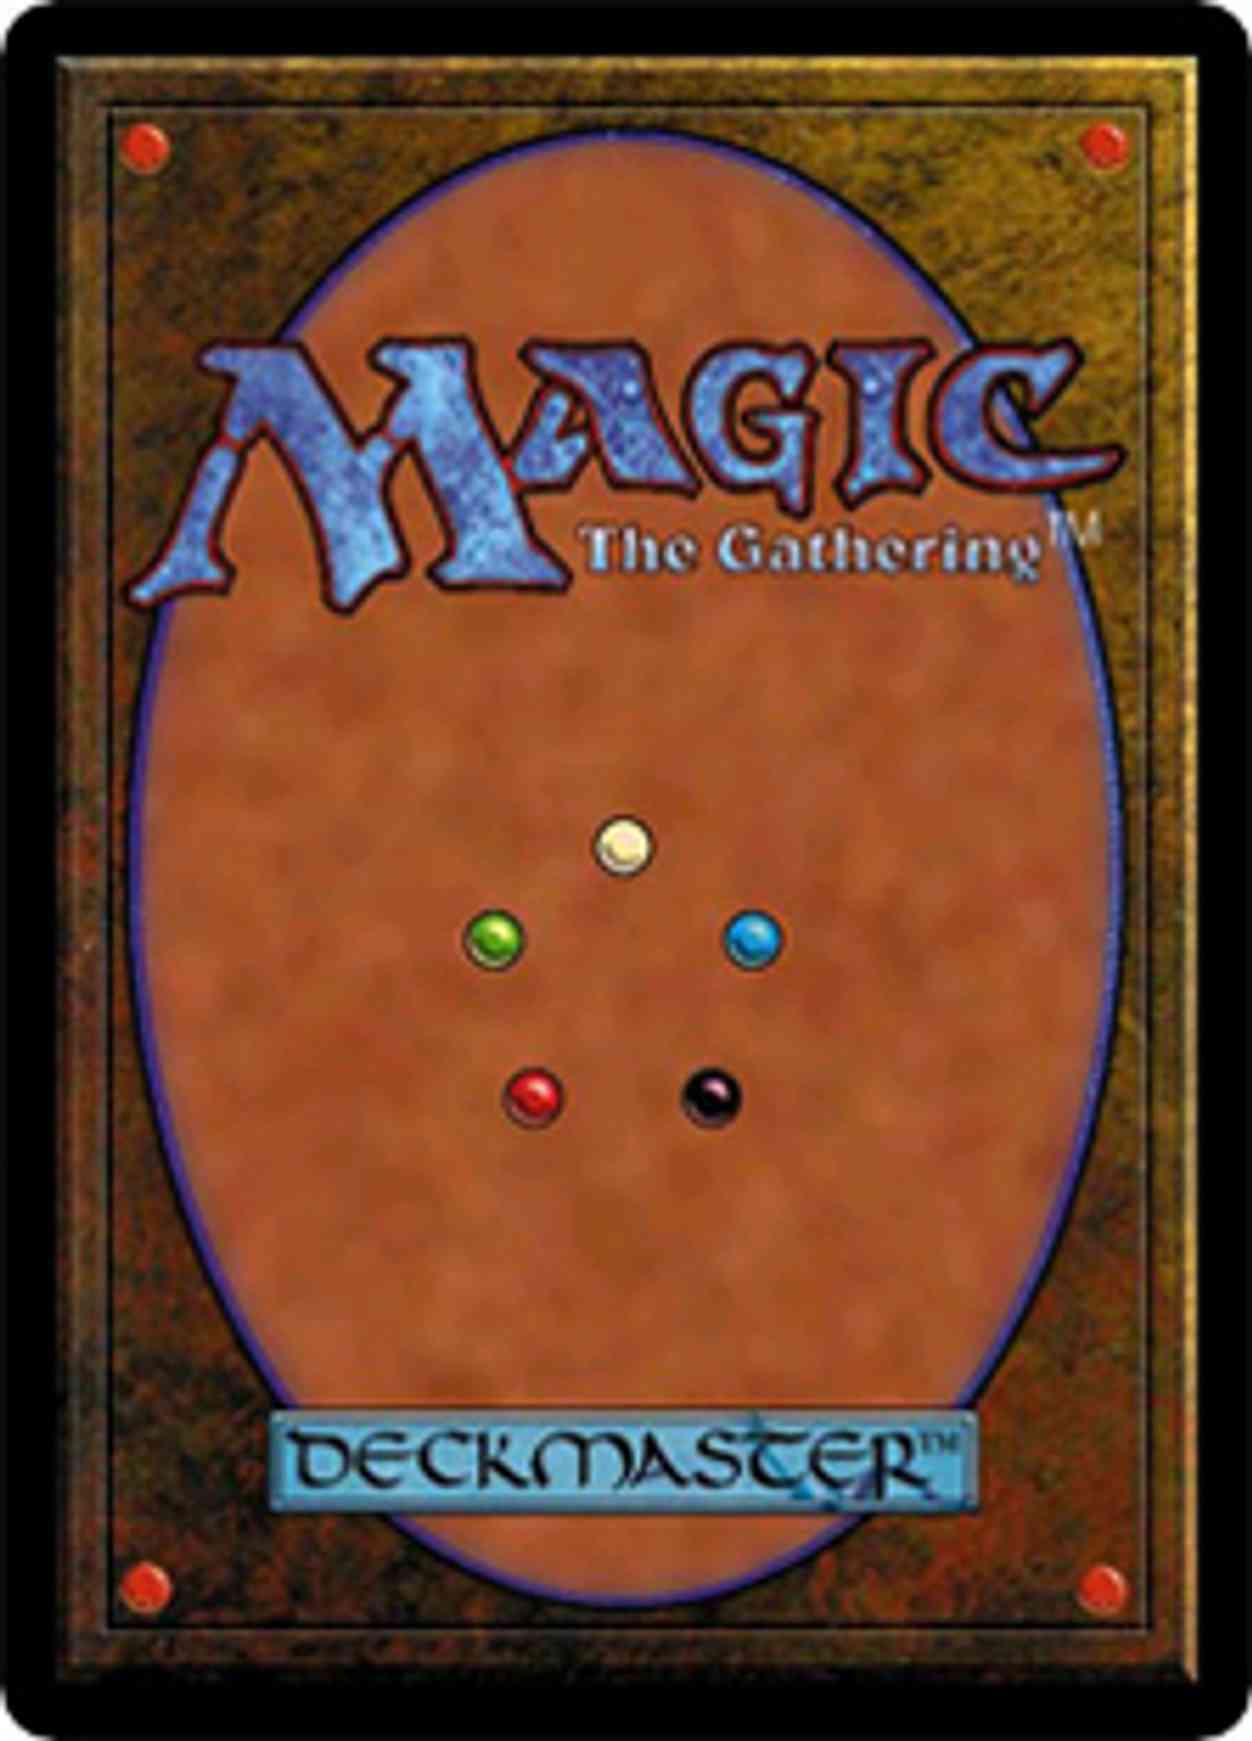 Wren's Run Vanquisher magic card front